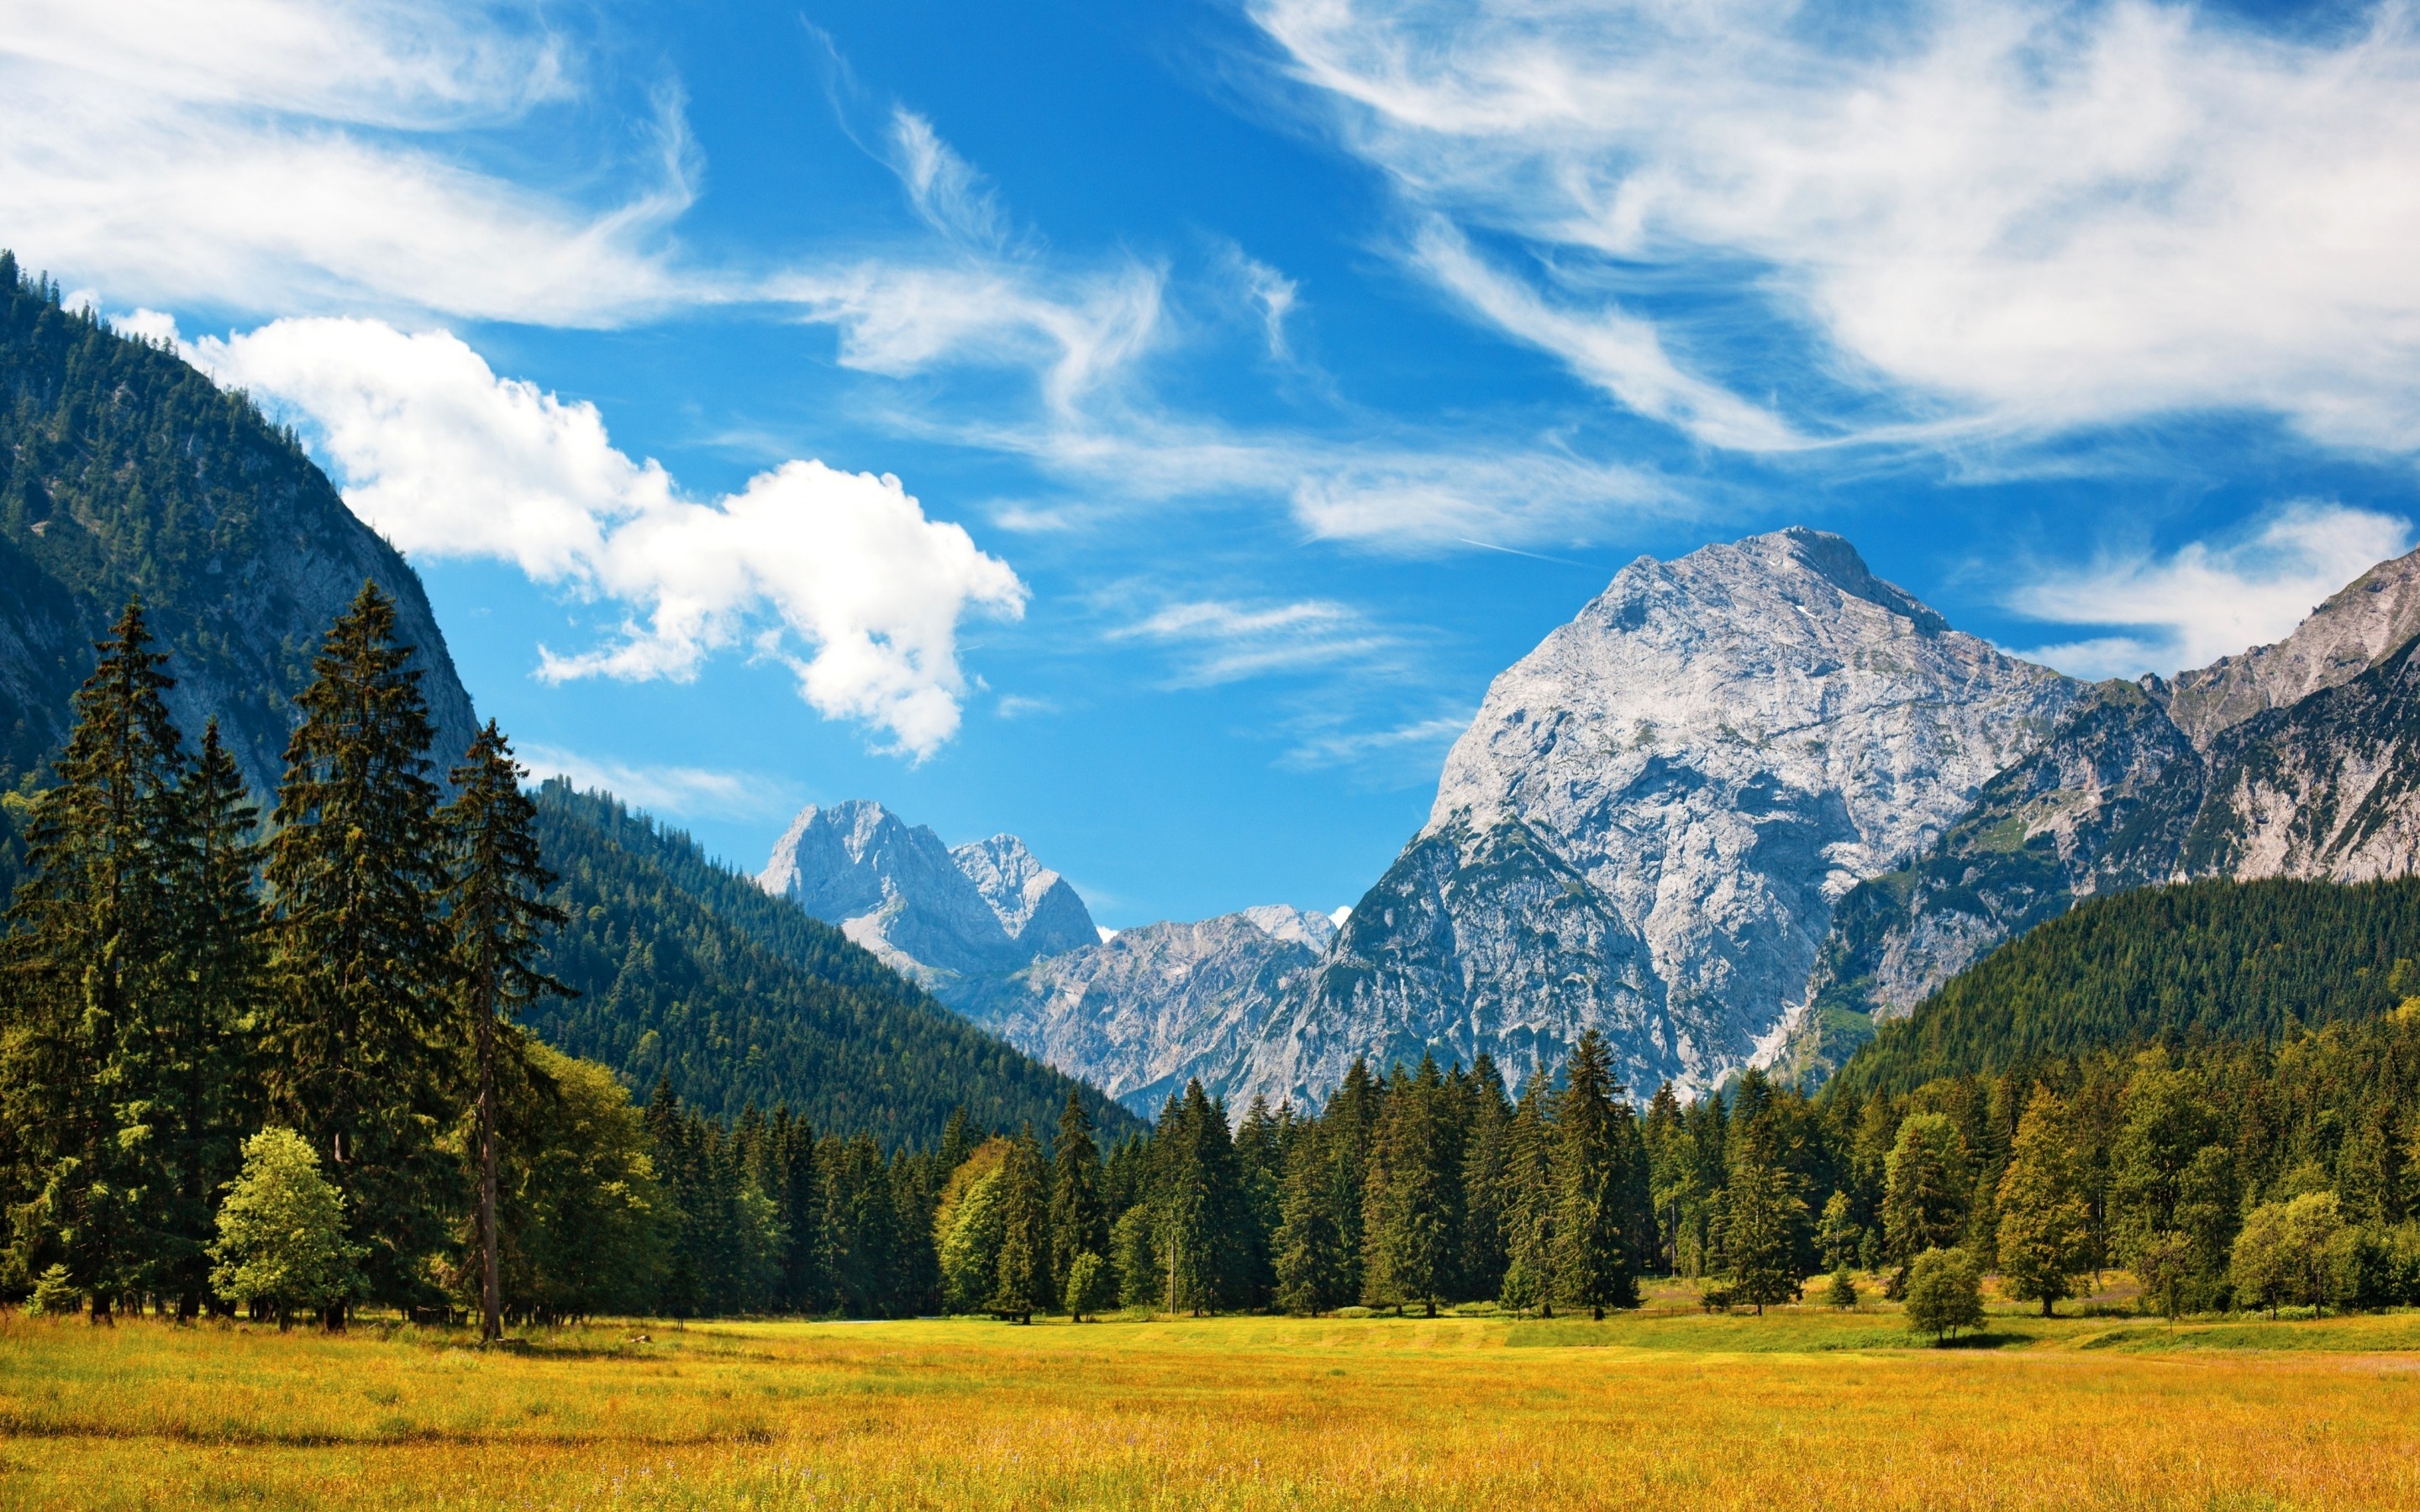 Stunning Mountain Landscape for 2880 x 1800 Retina Display resolution